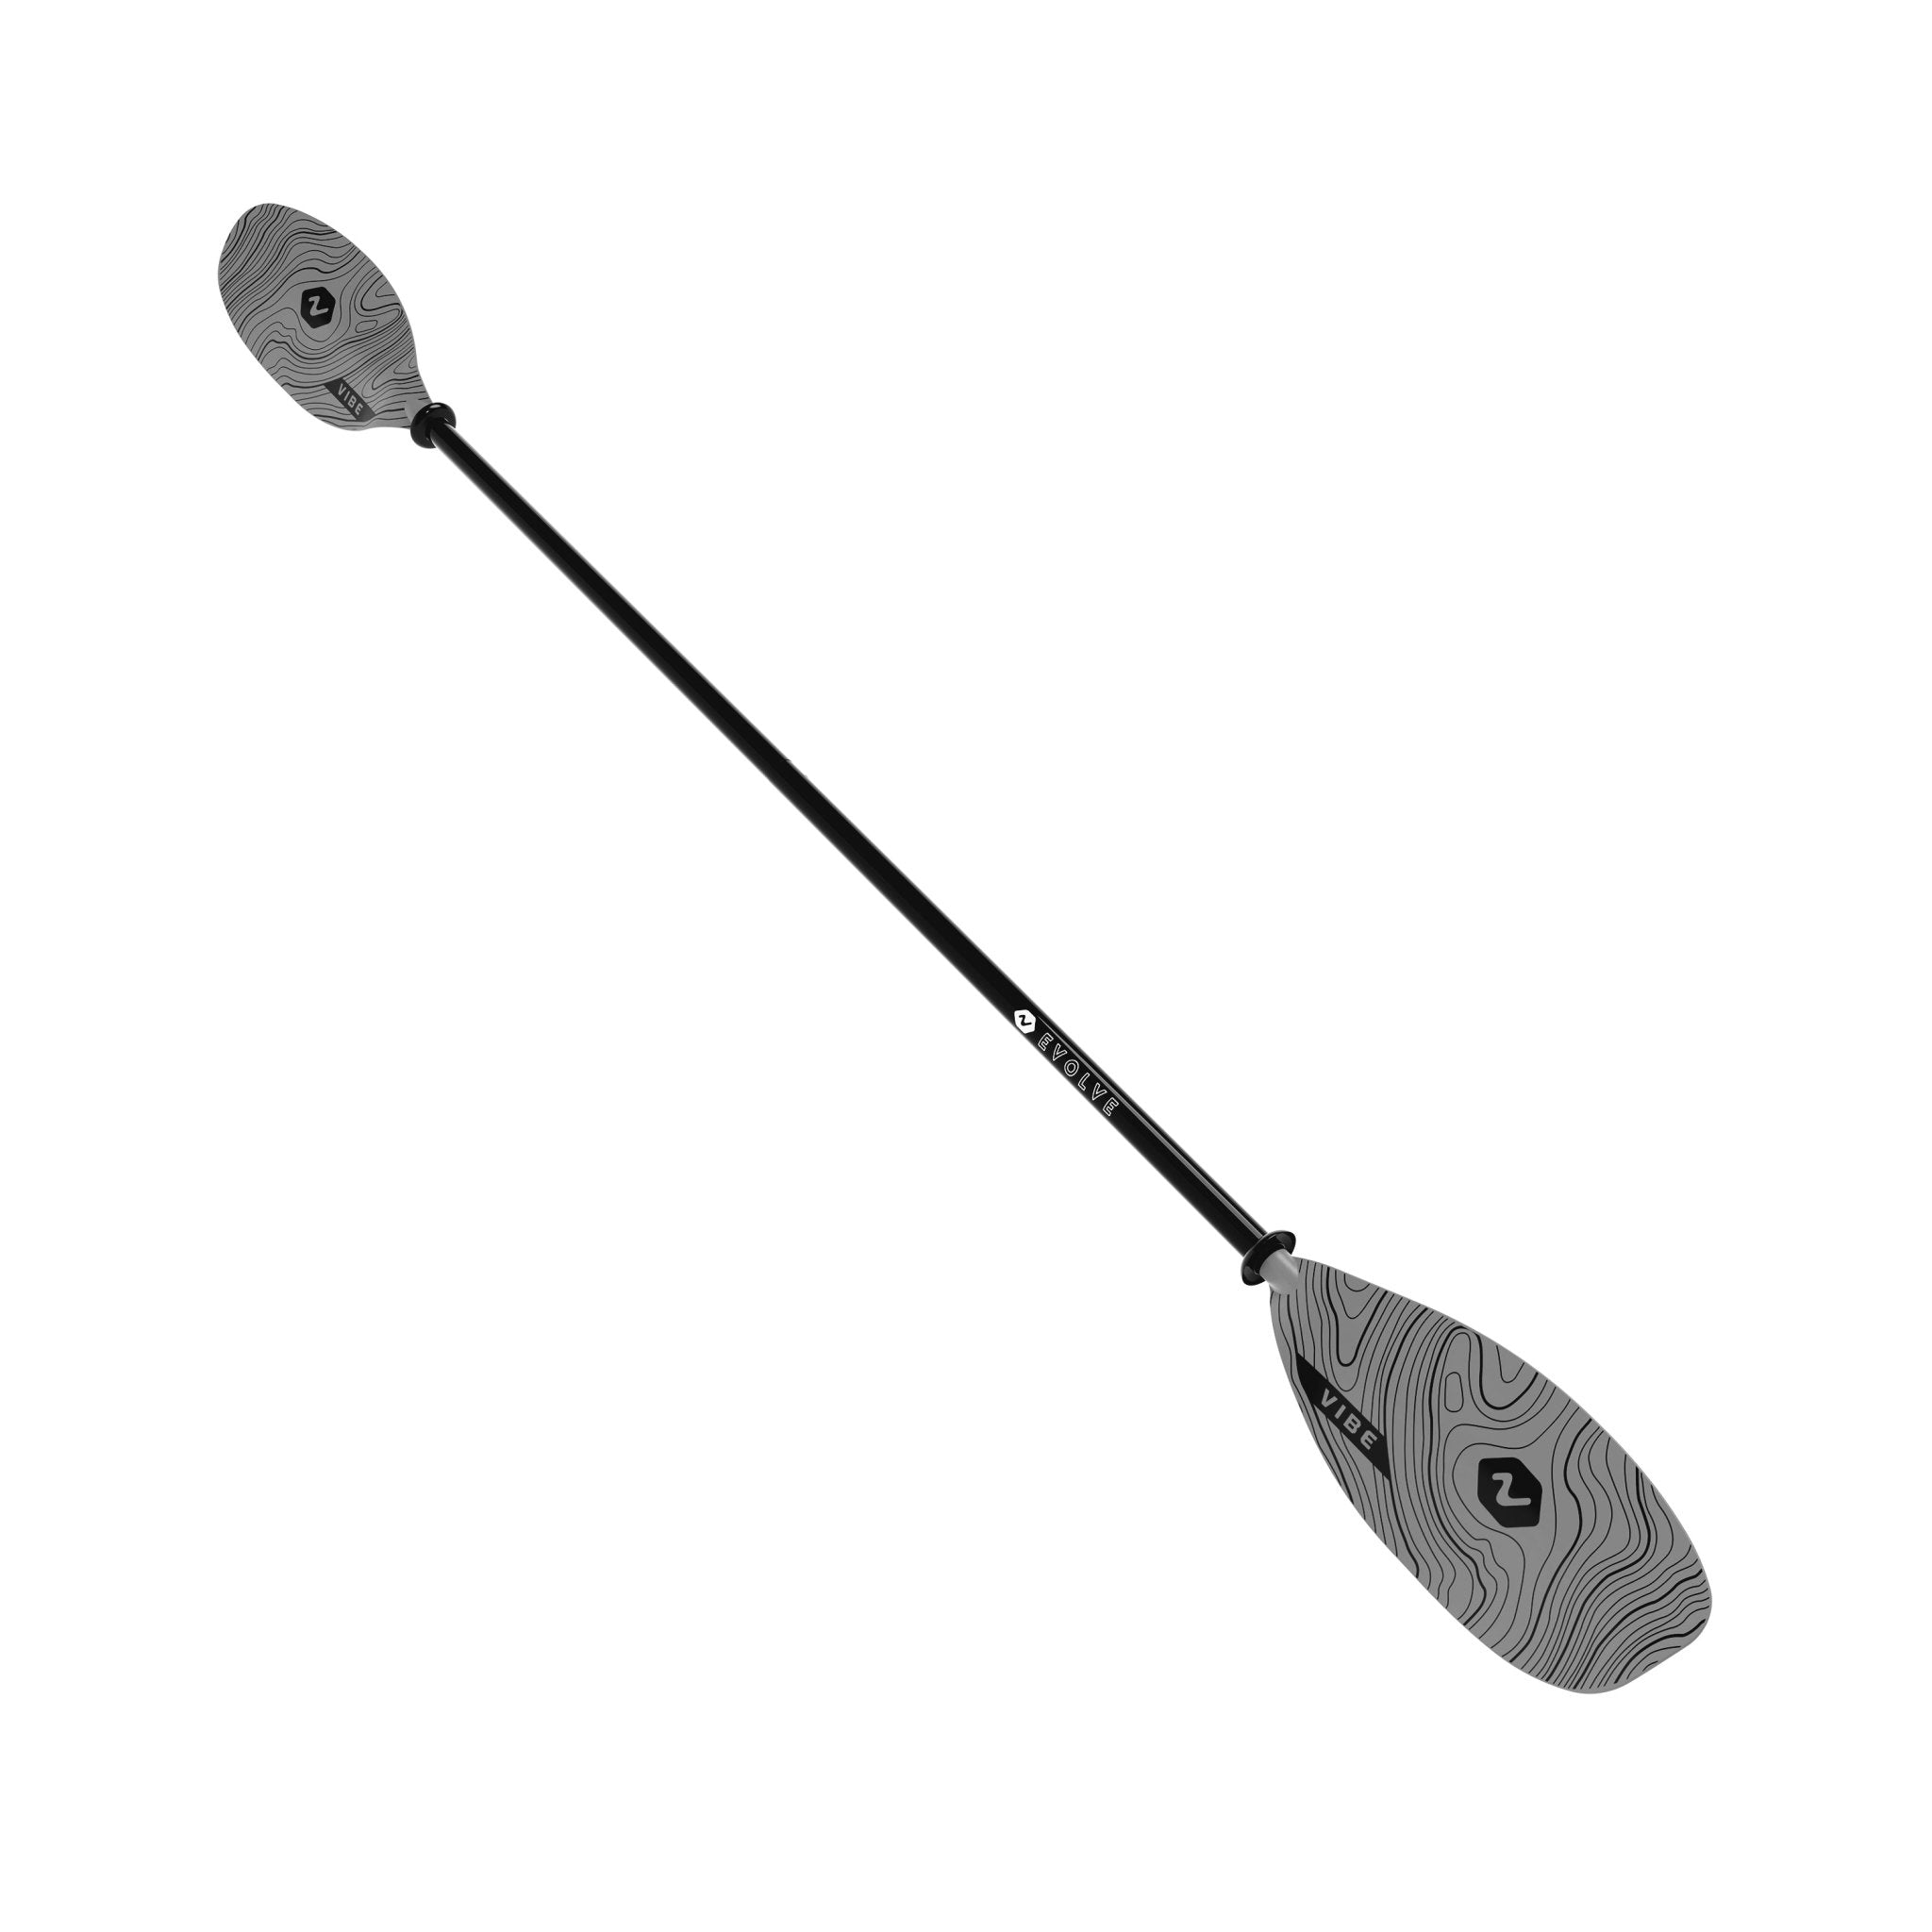 Evolve Fiberglass Paddle (230-250cm adjustable)